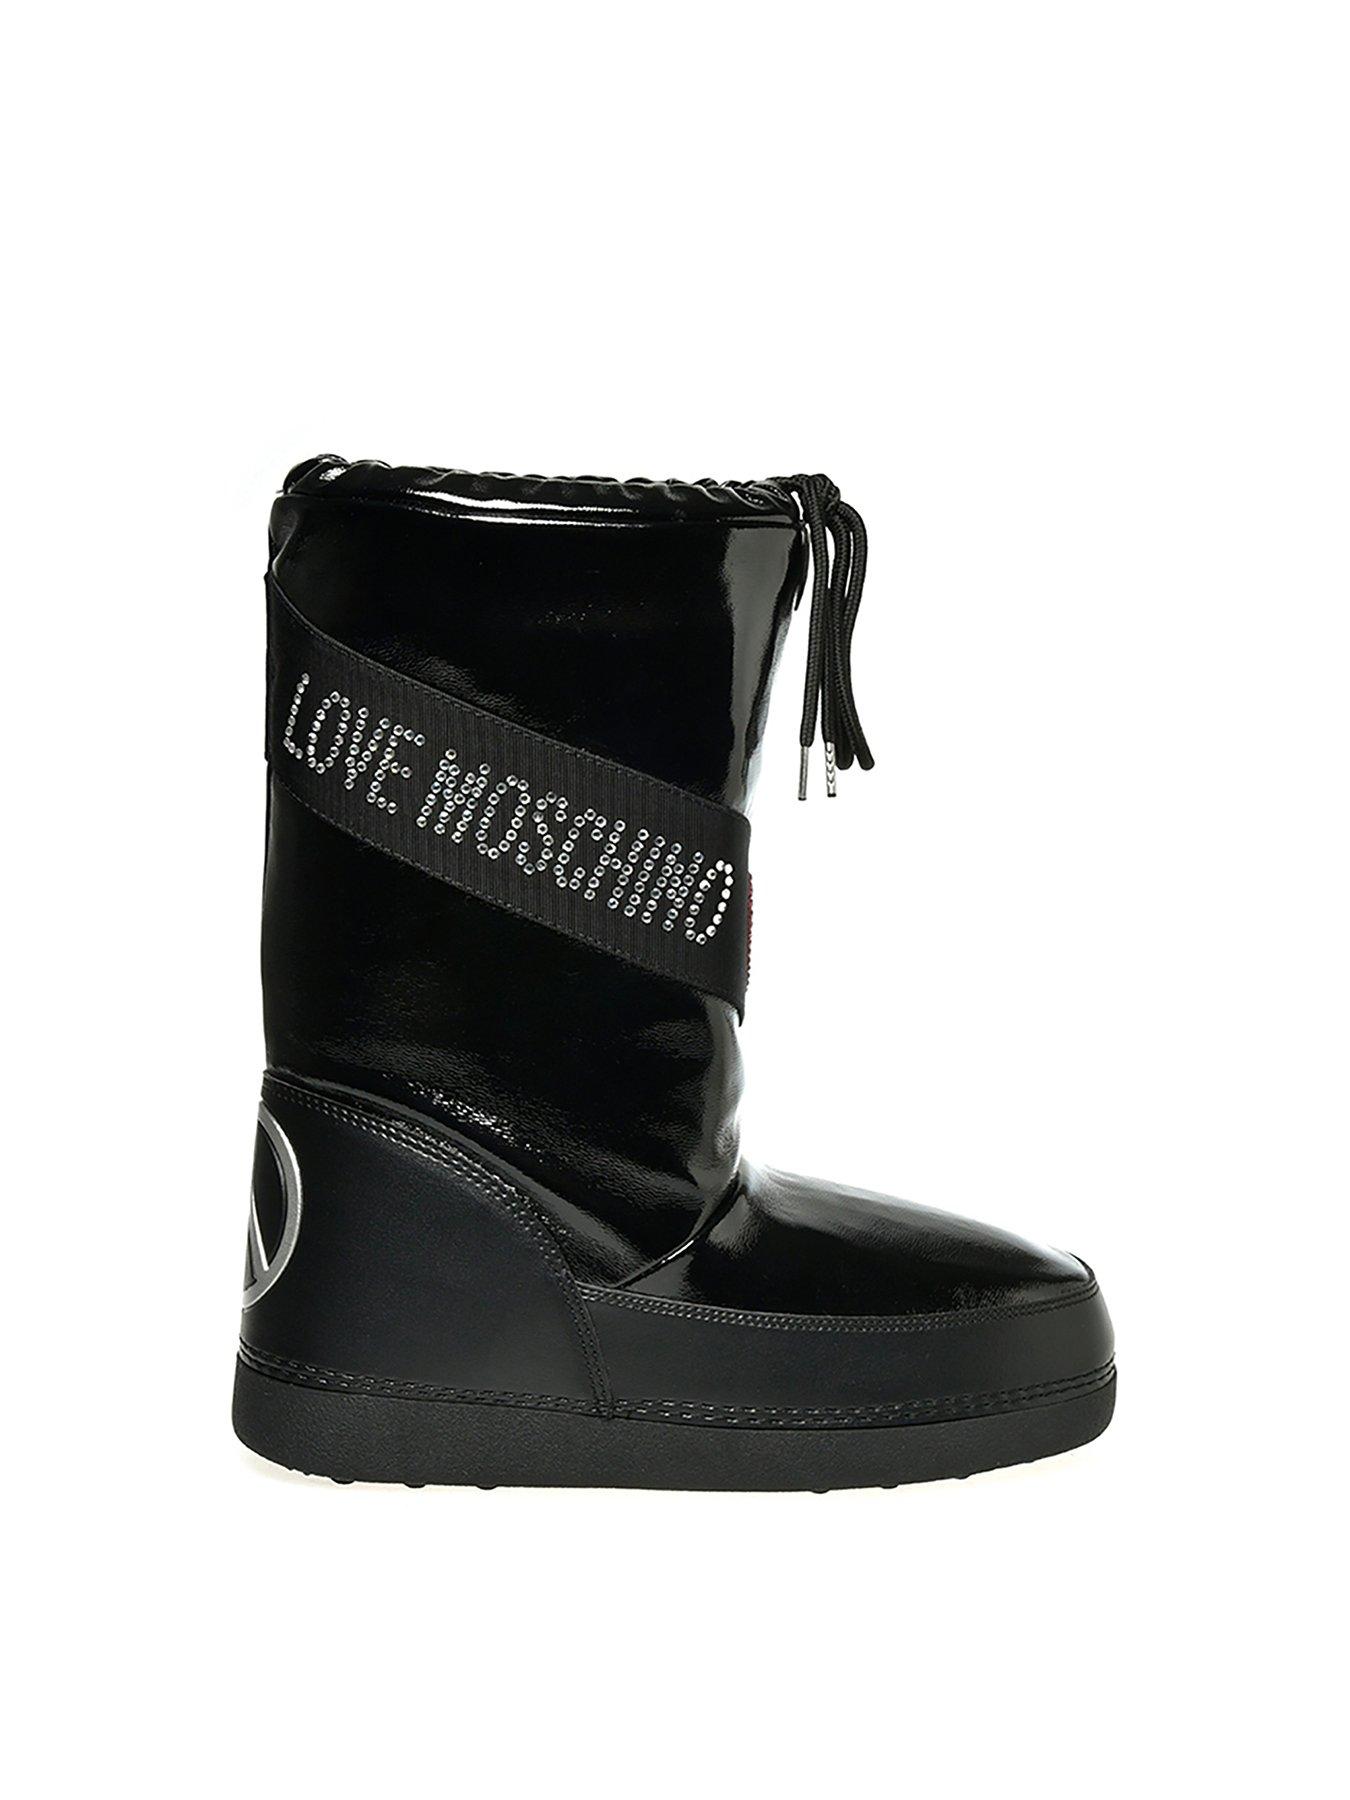 love moschino moon boot